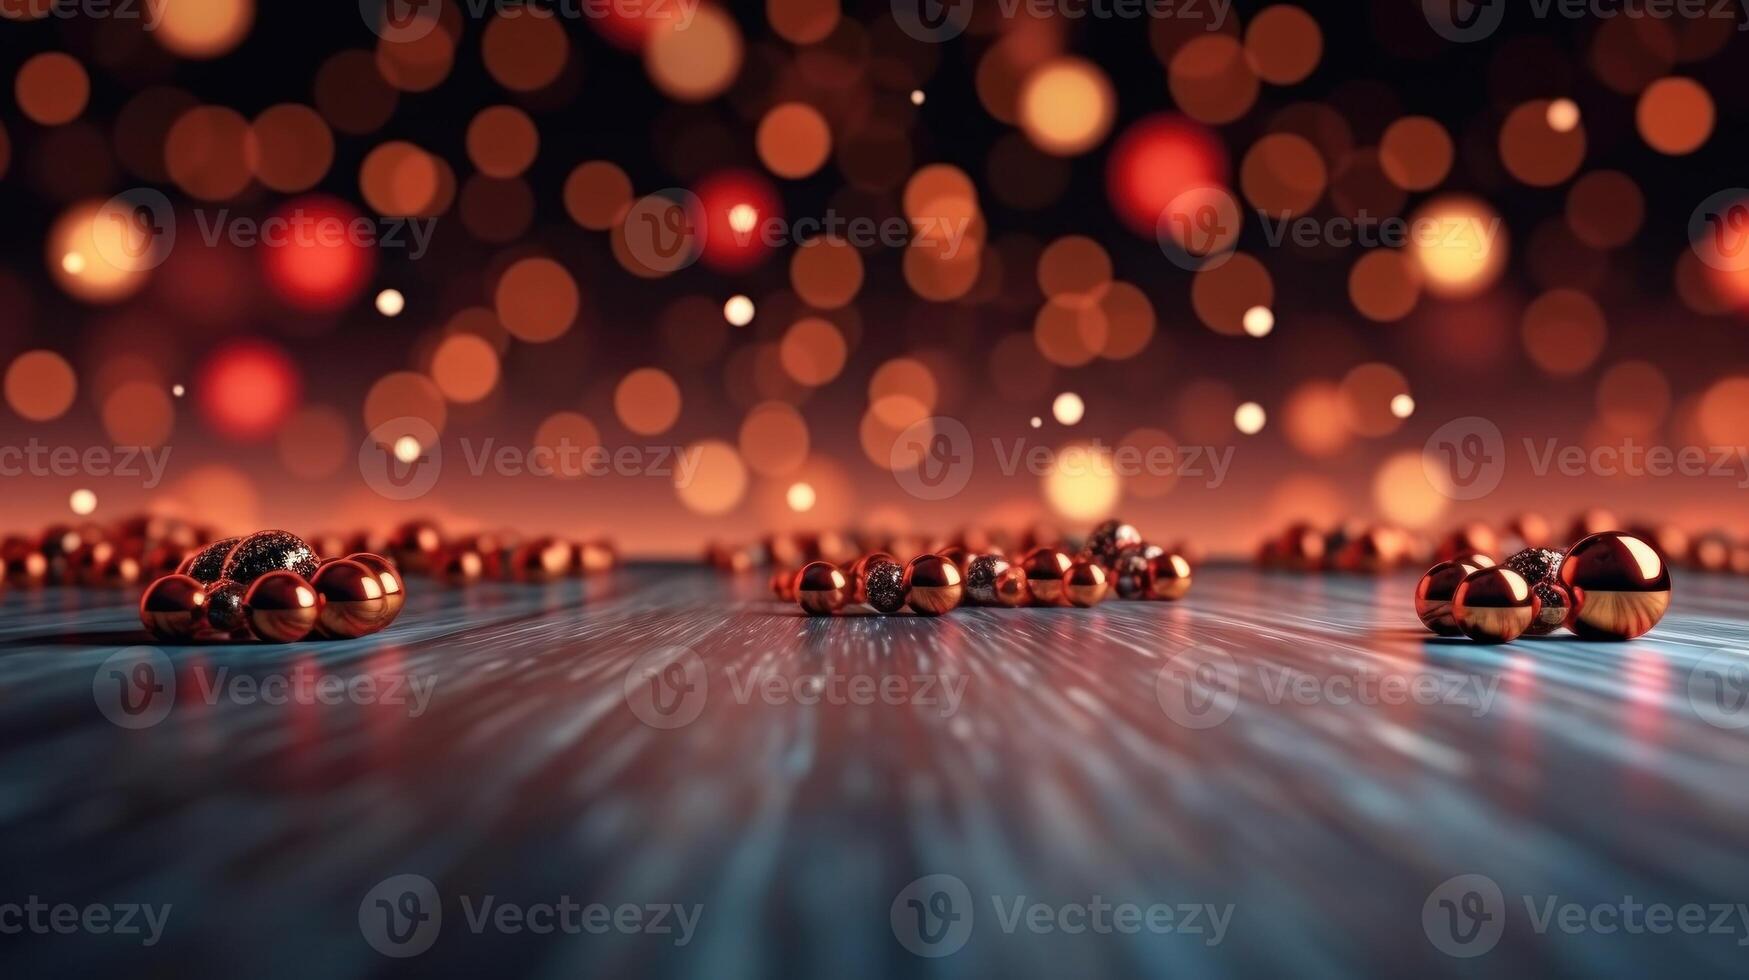 Merry Christmas empty background. Illustration photo